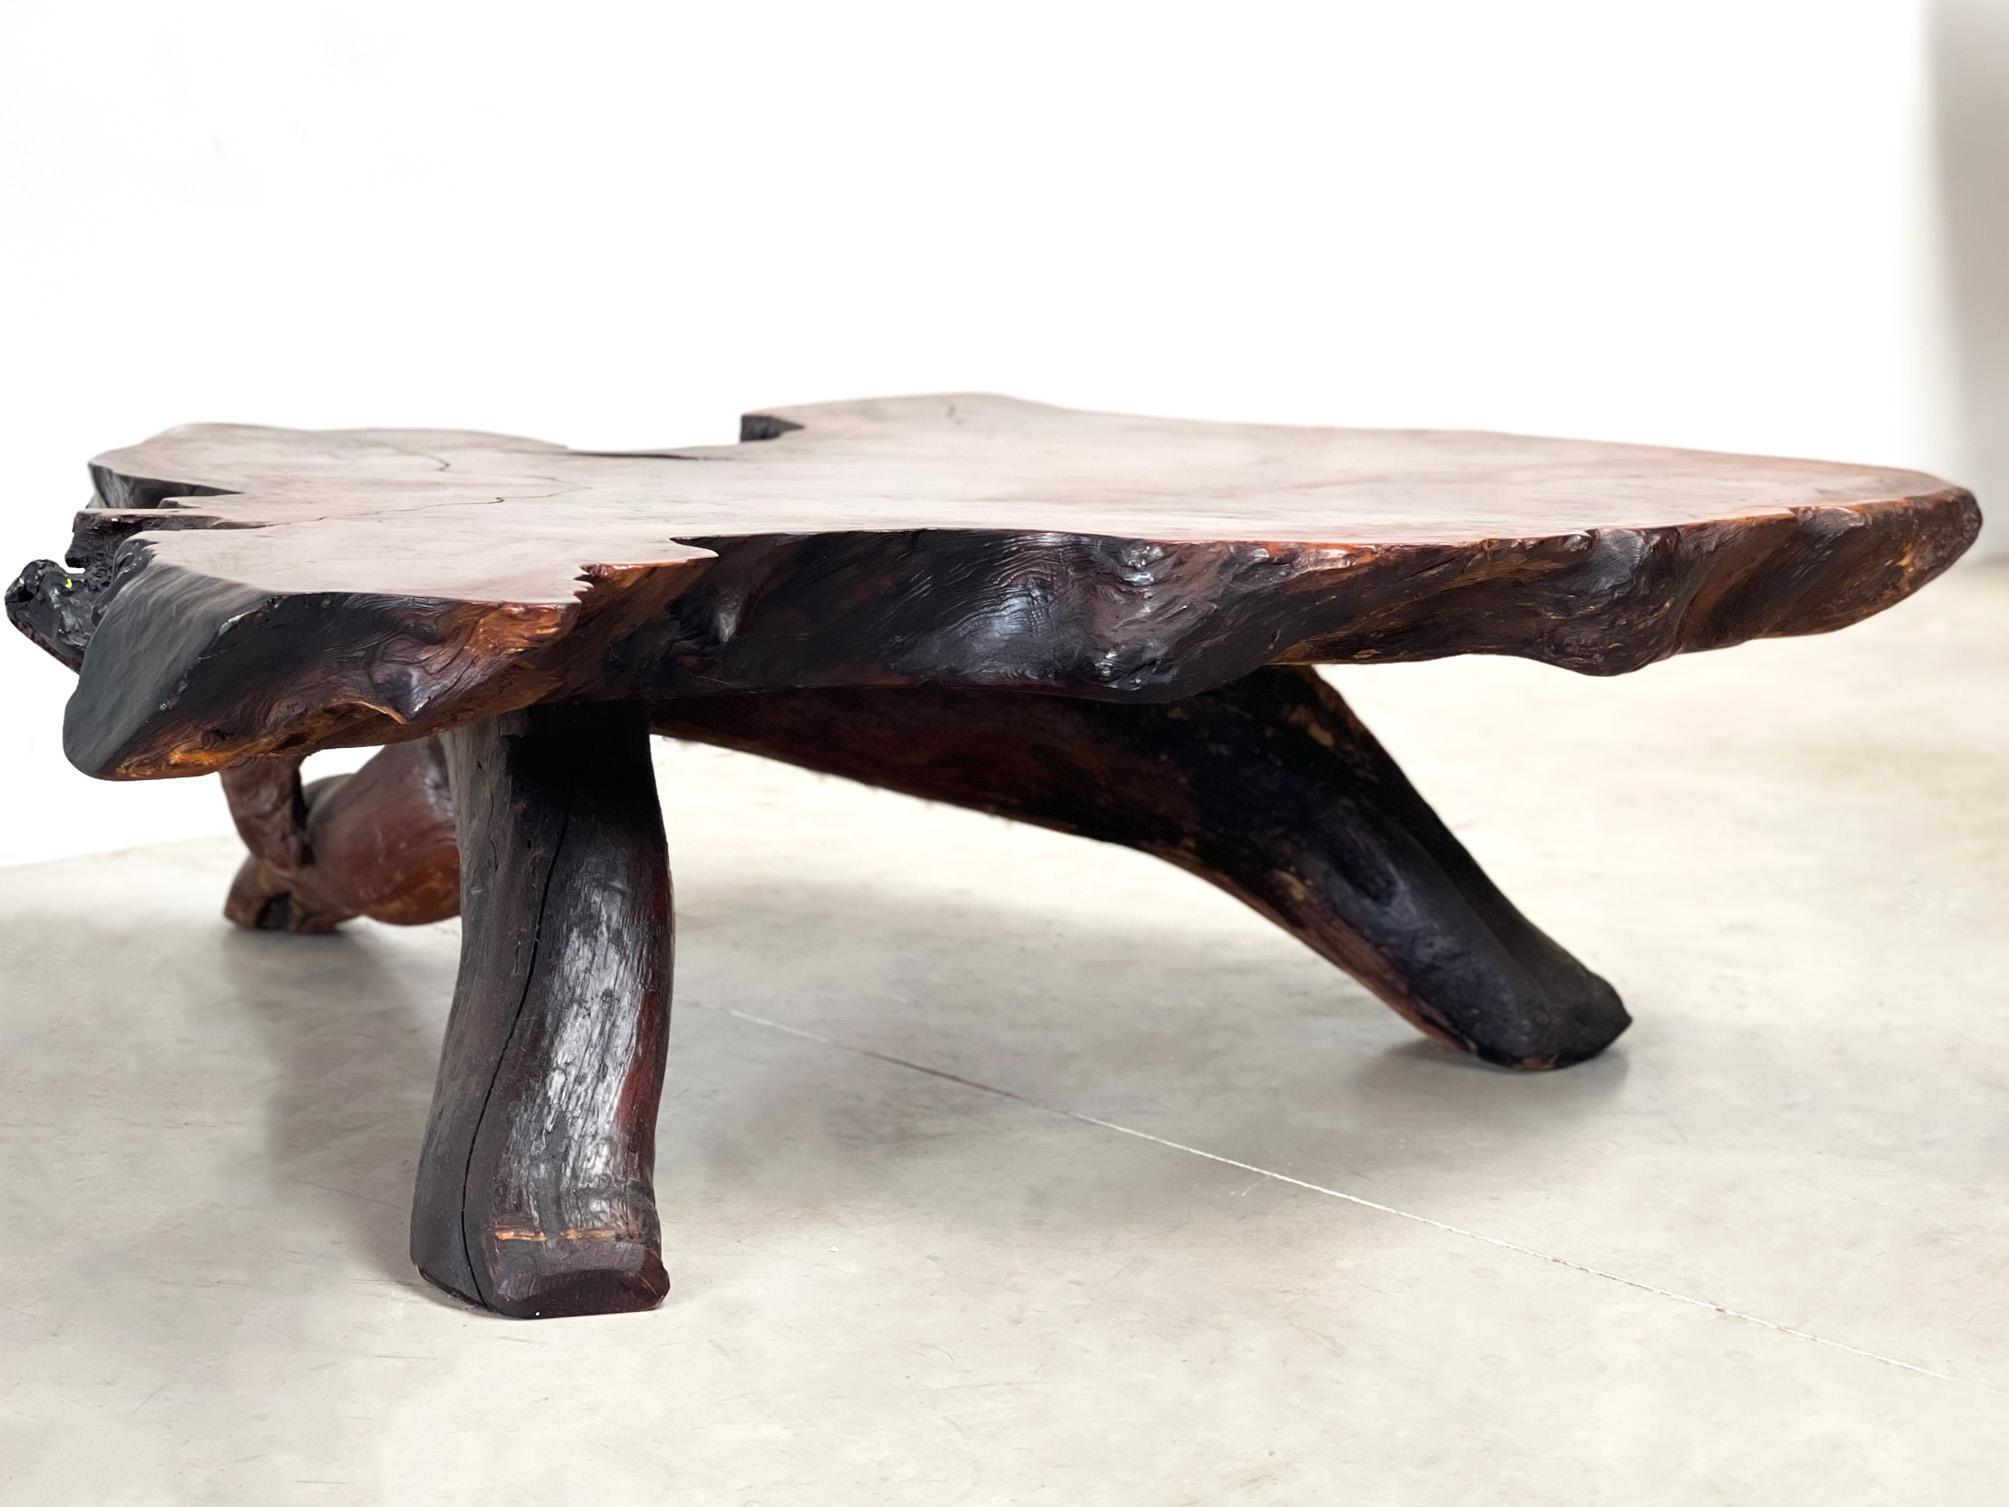 Wood XL Brutalist sequoia tree trunk coffee table